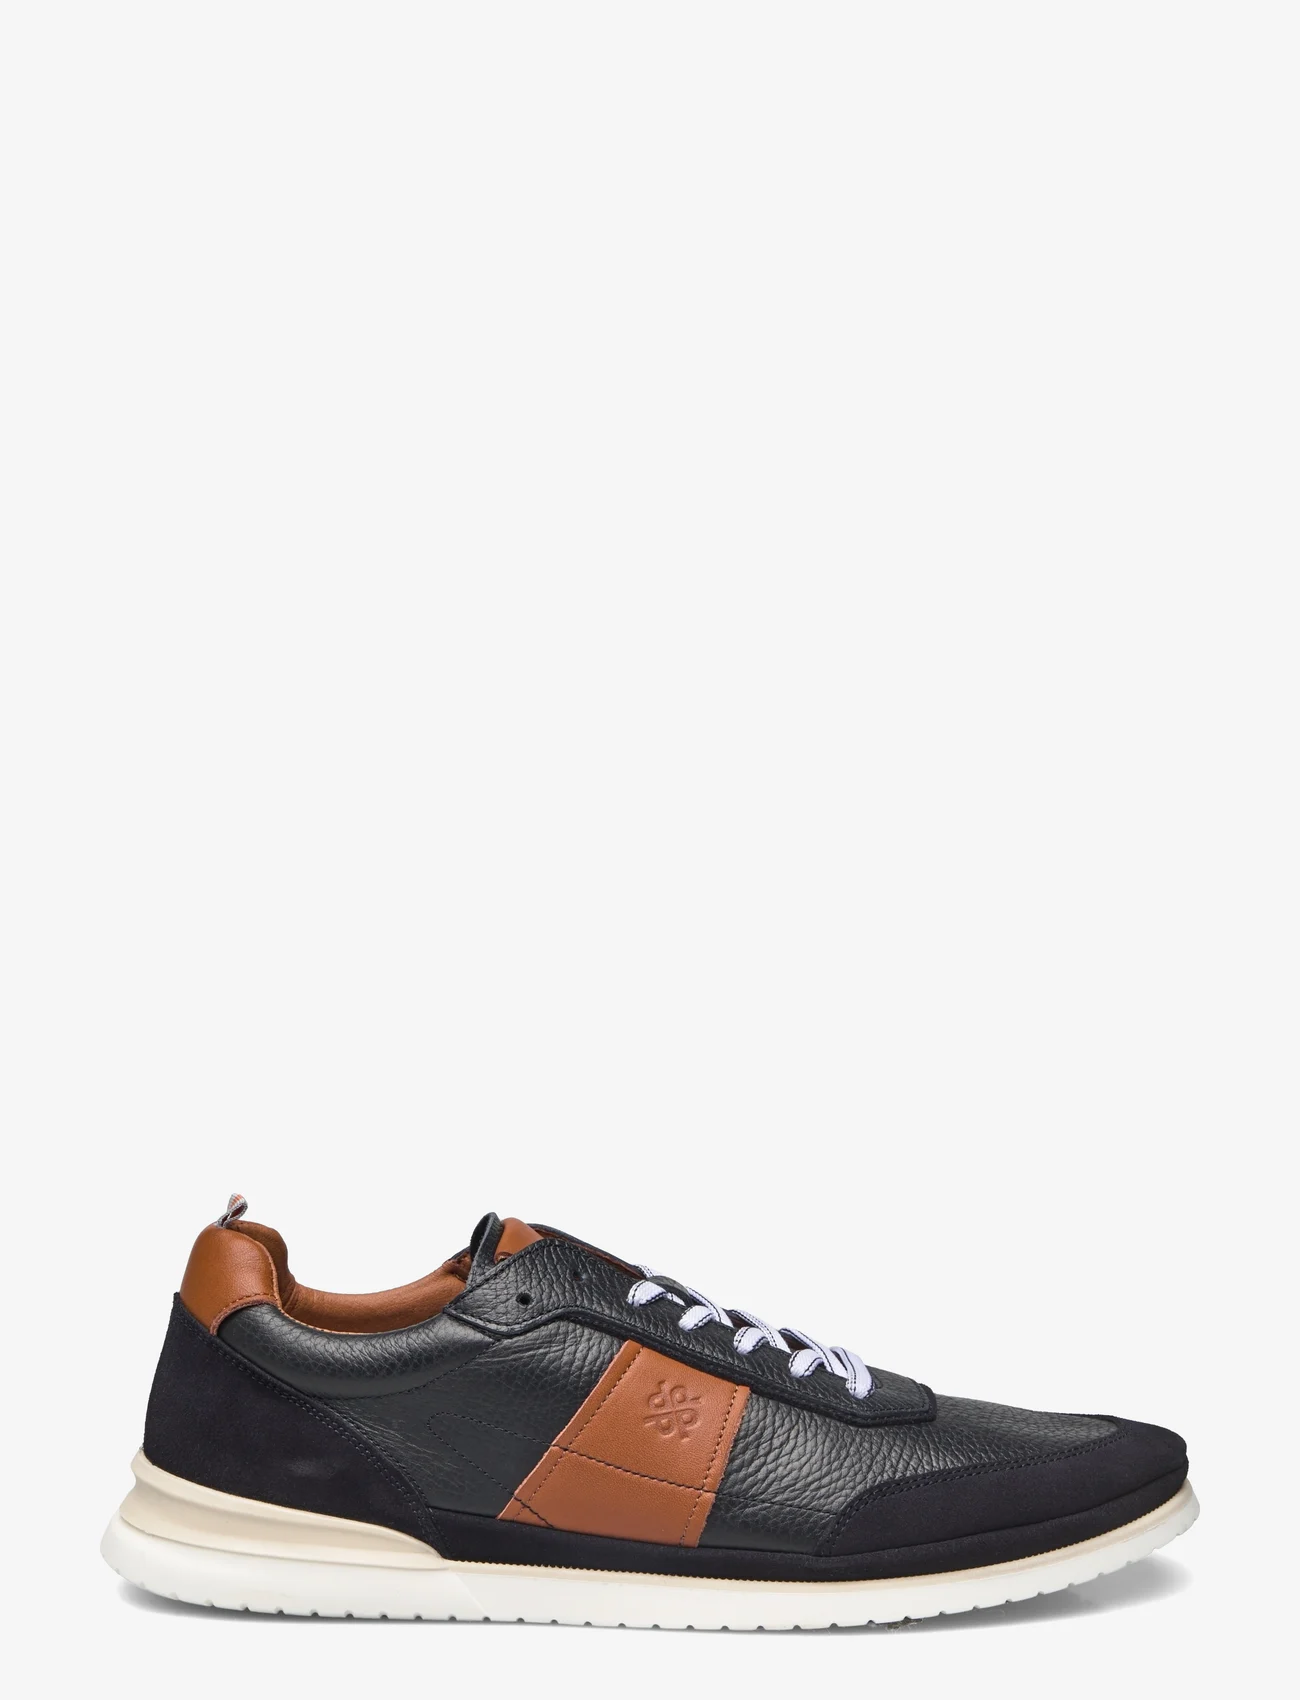 Playboy Footwear - Dan - matalavartiset tennarit - navy leather/suede combi - 1